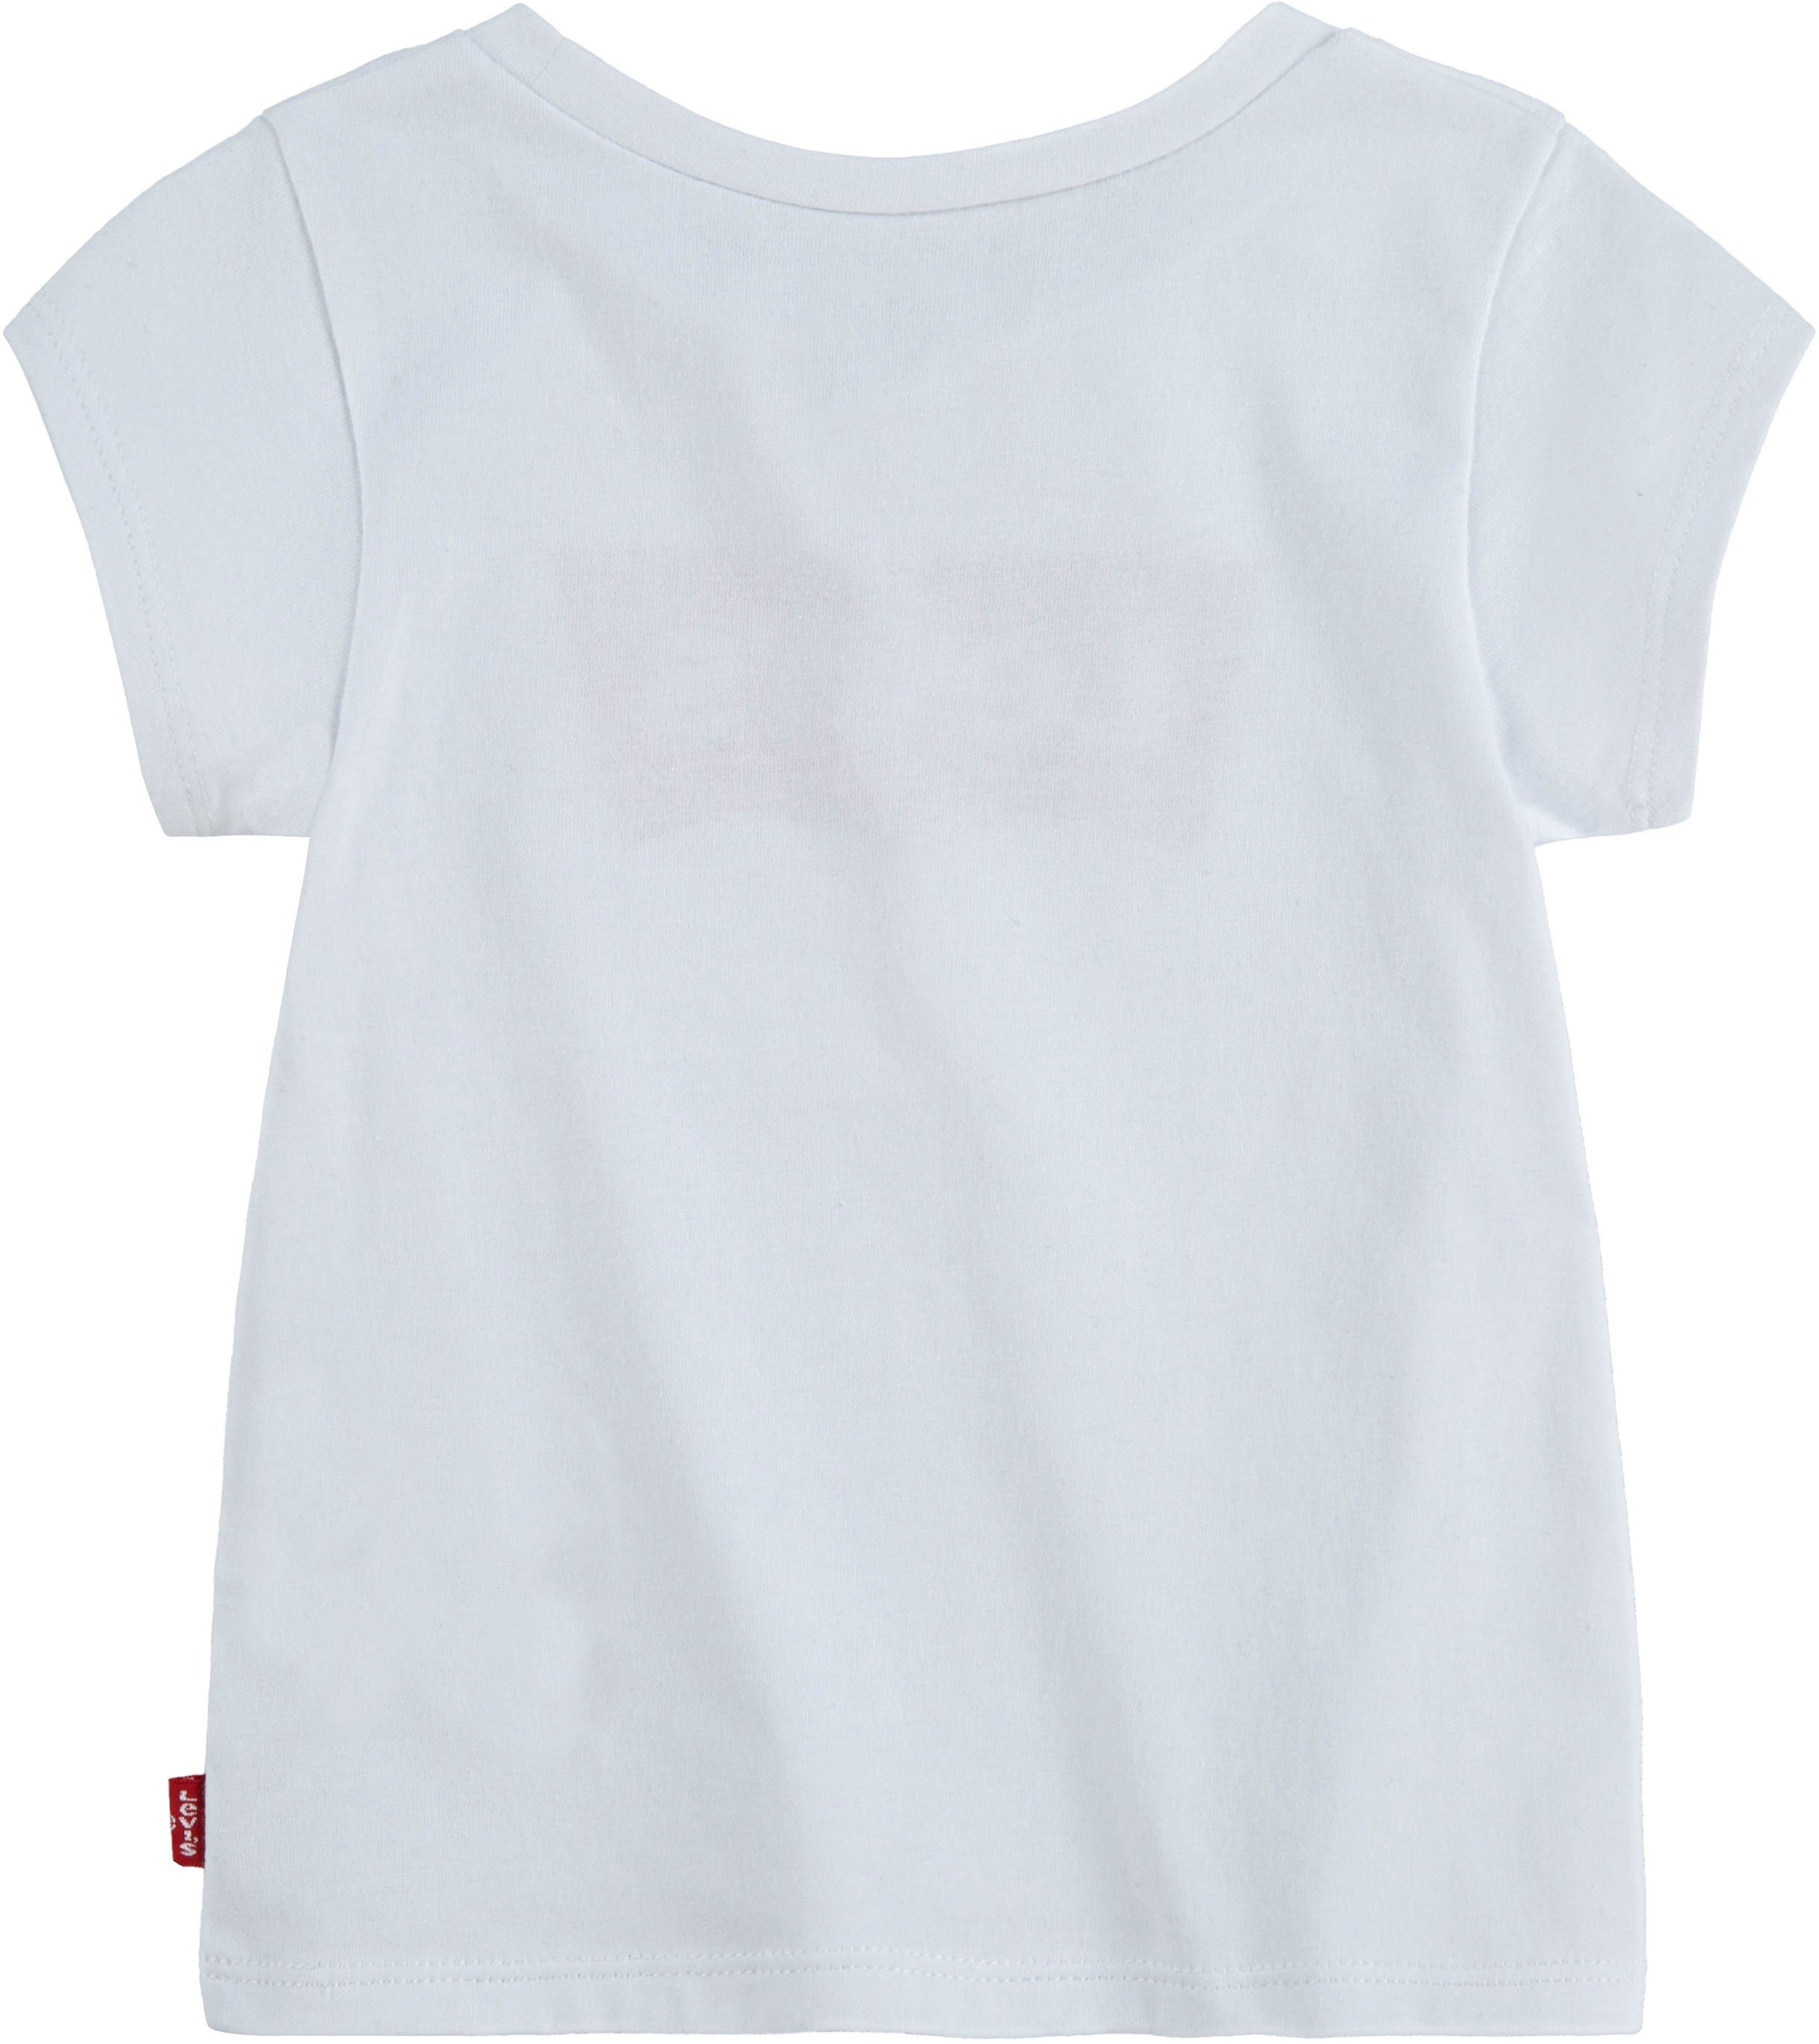 Kids GIRLS rot-weiß T-Shirt for Levi's® BABY